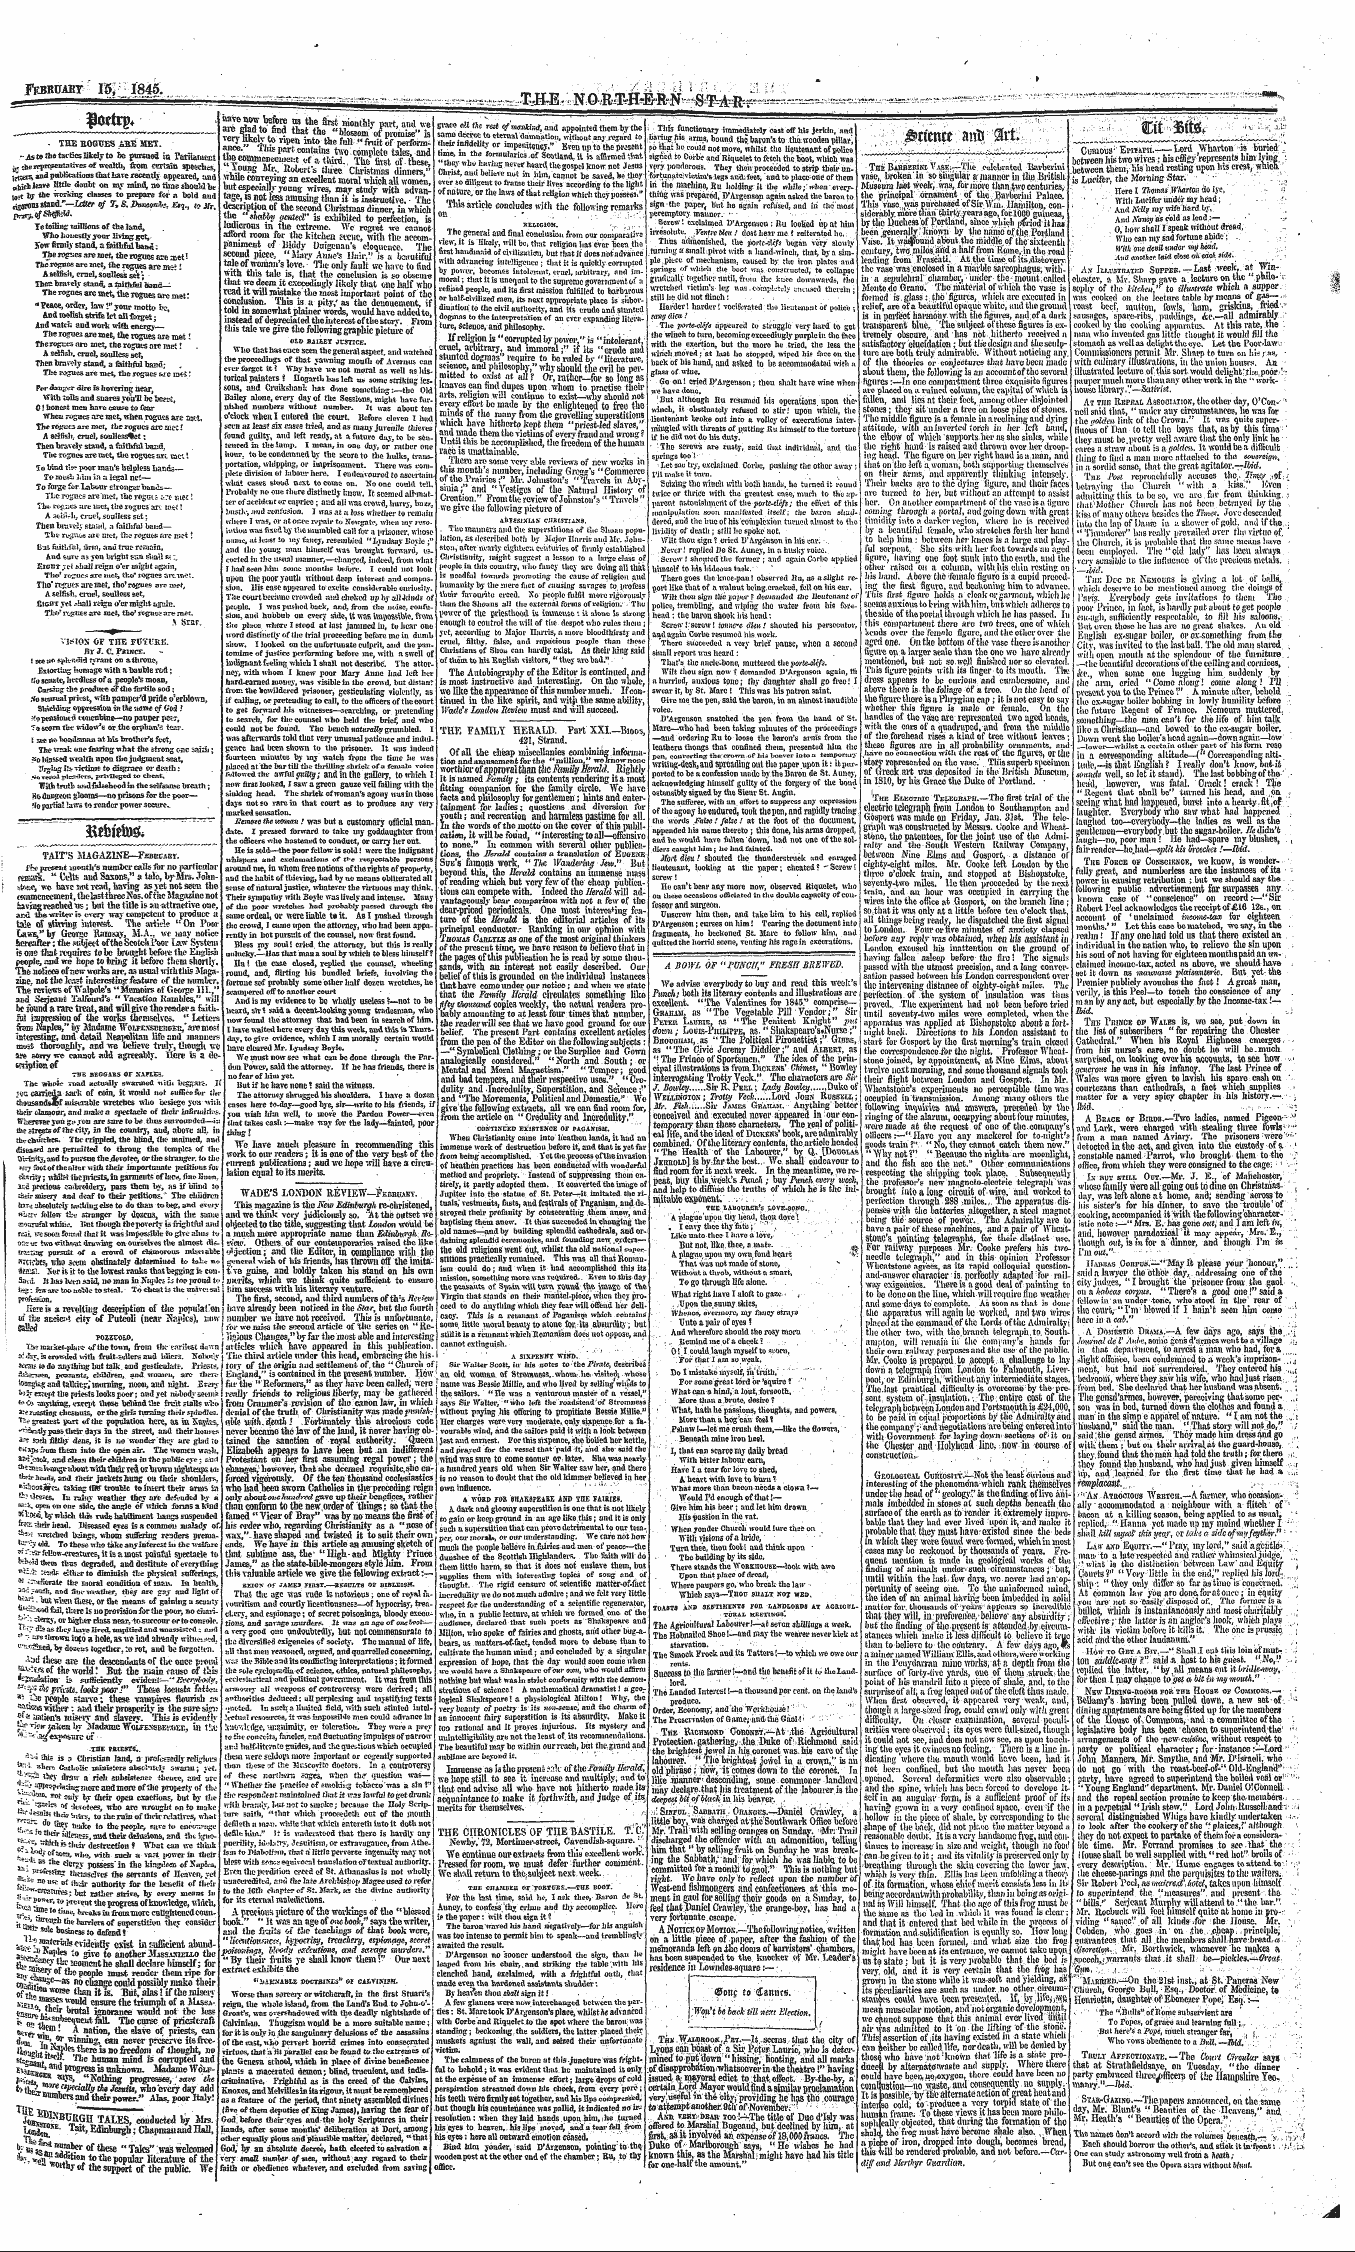 Northern Star (1837-1852): jS F Y, 4th edition - Mm** -&Lt;^